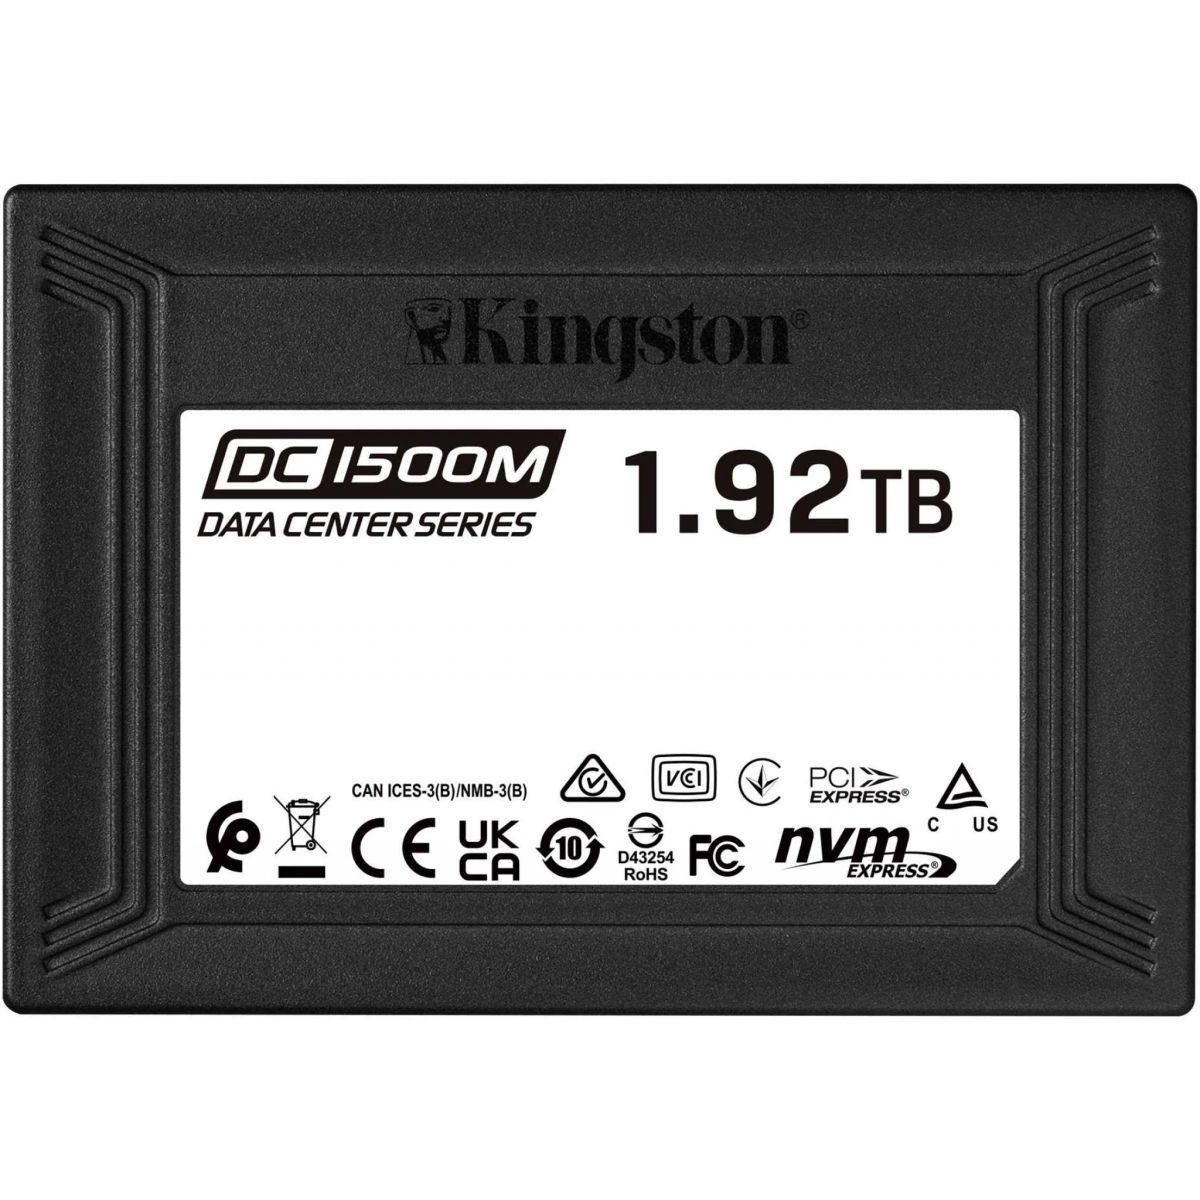 KINGSTON SEDC1500M/1920G, 12 GB, HDD, Zoll, intern 2,5 SSD